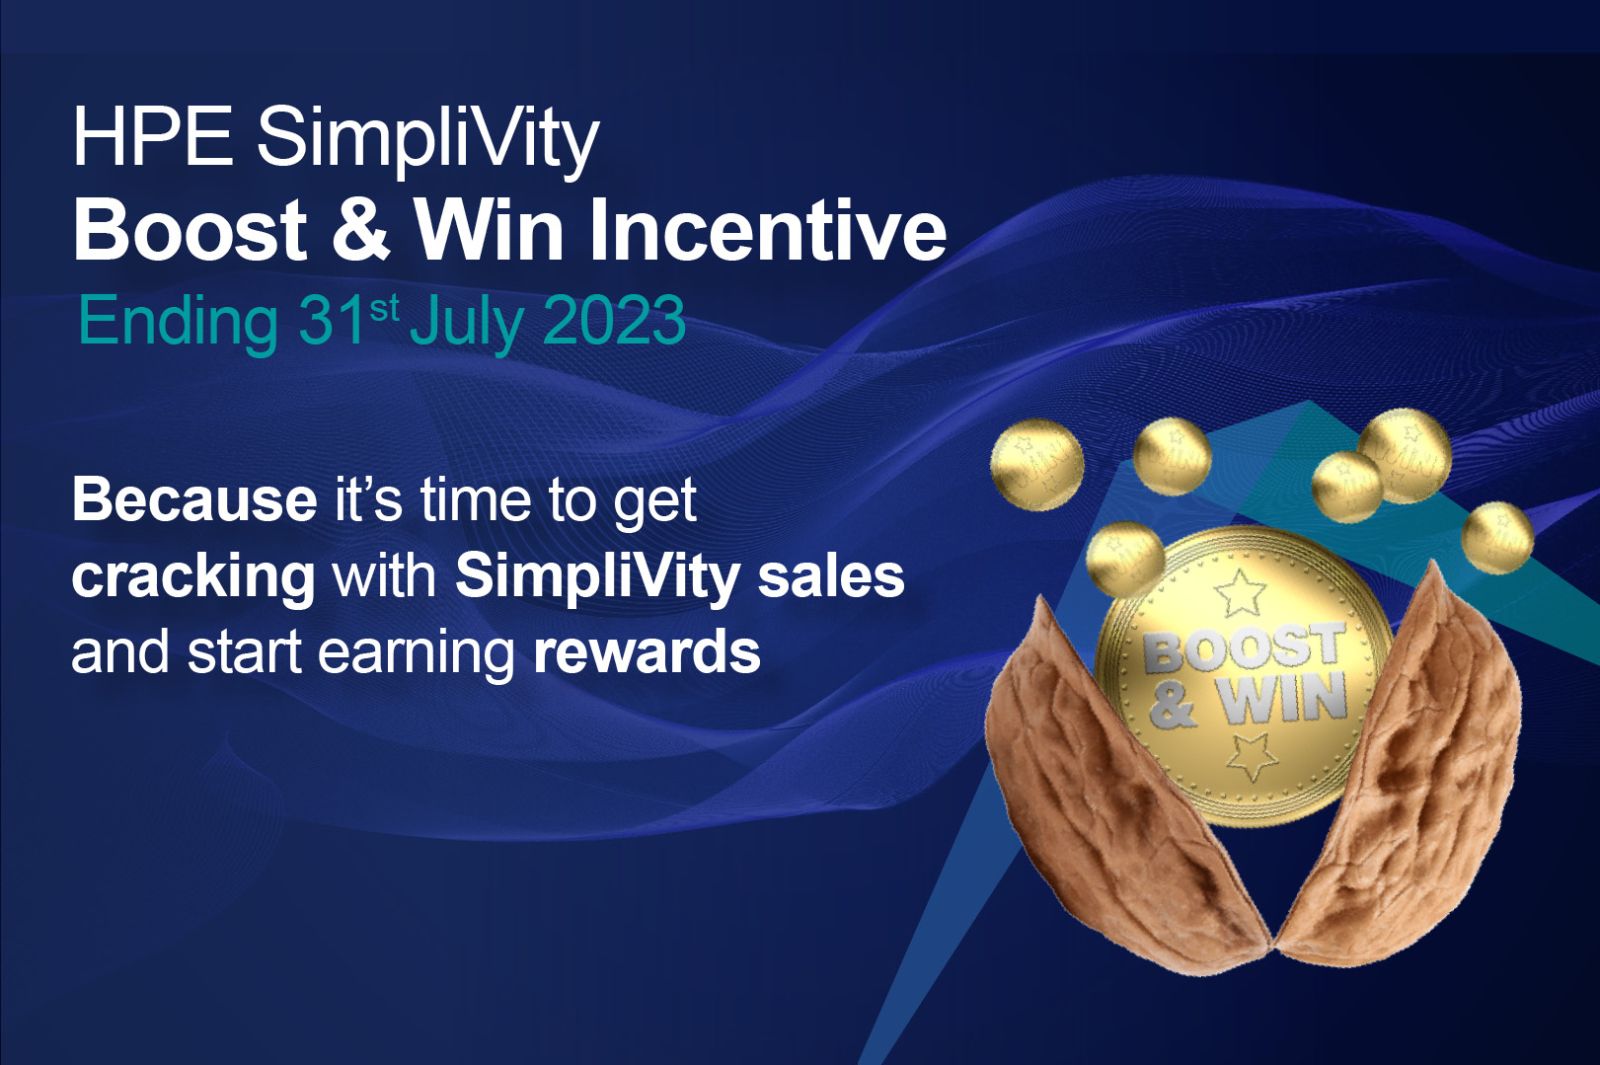 HPE SimpliVity Boost & Win Incentive